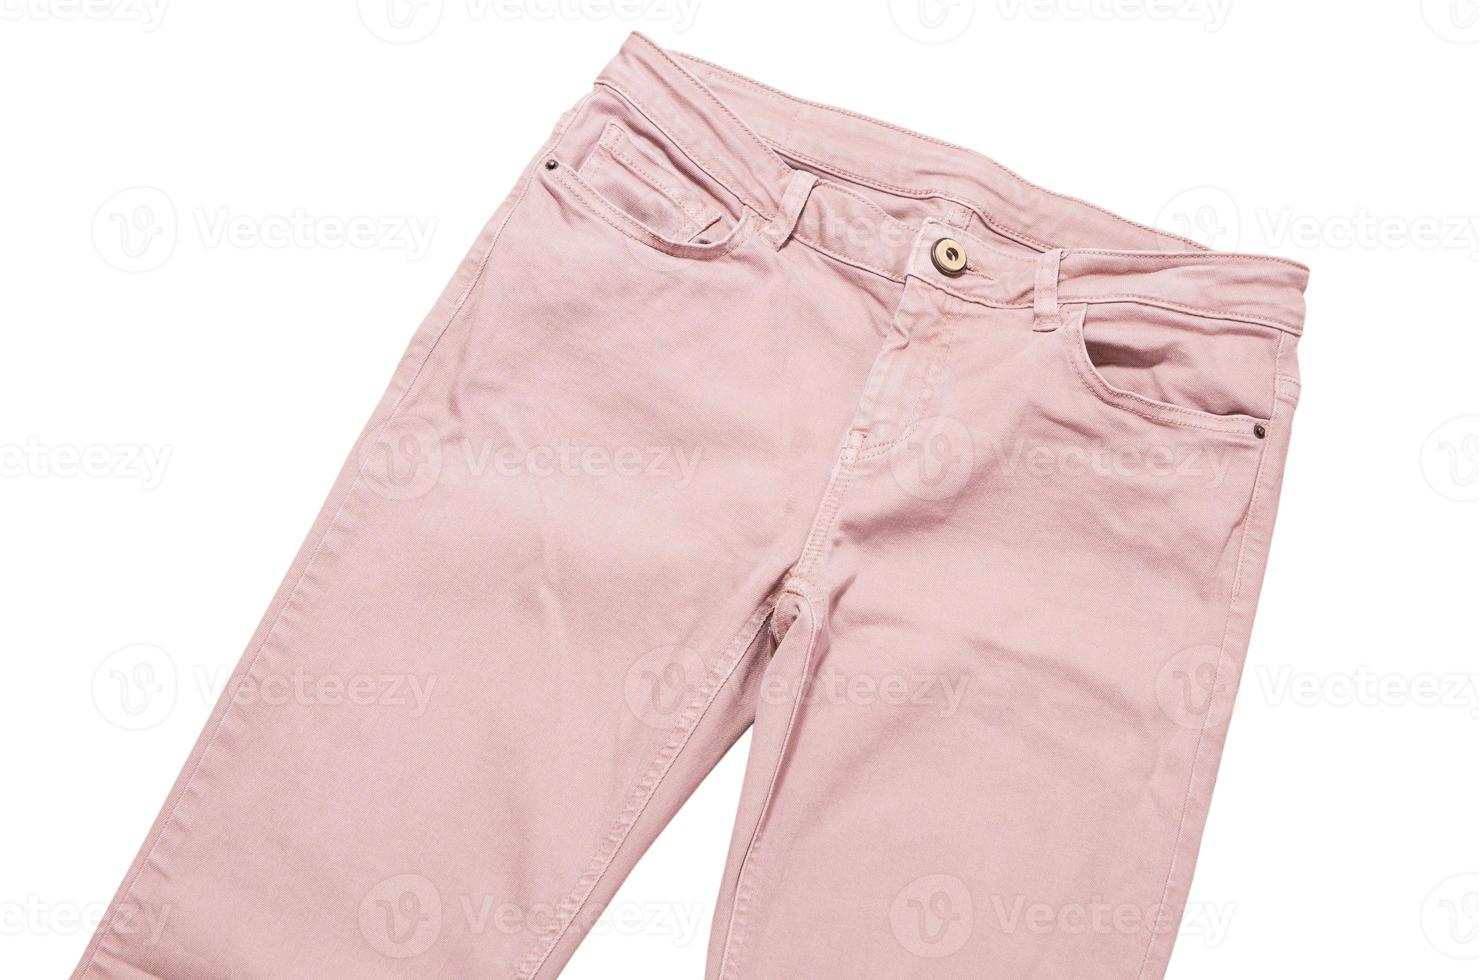 pantaloni femminili, pantaloni in denim rosa chiaro vista dall'alto isolato su sfondo bianco, pantaloni slim piegati foto